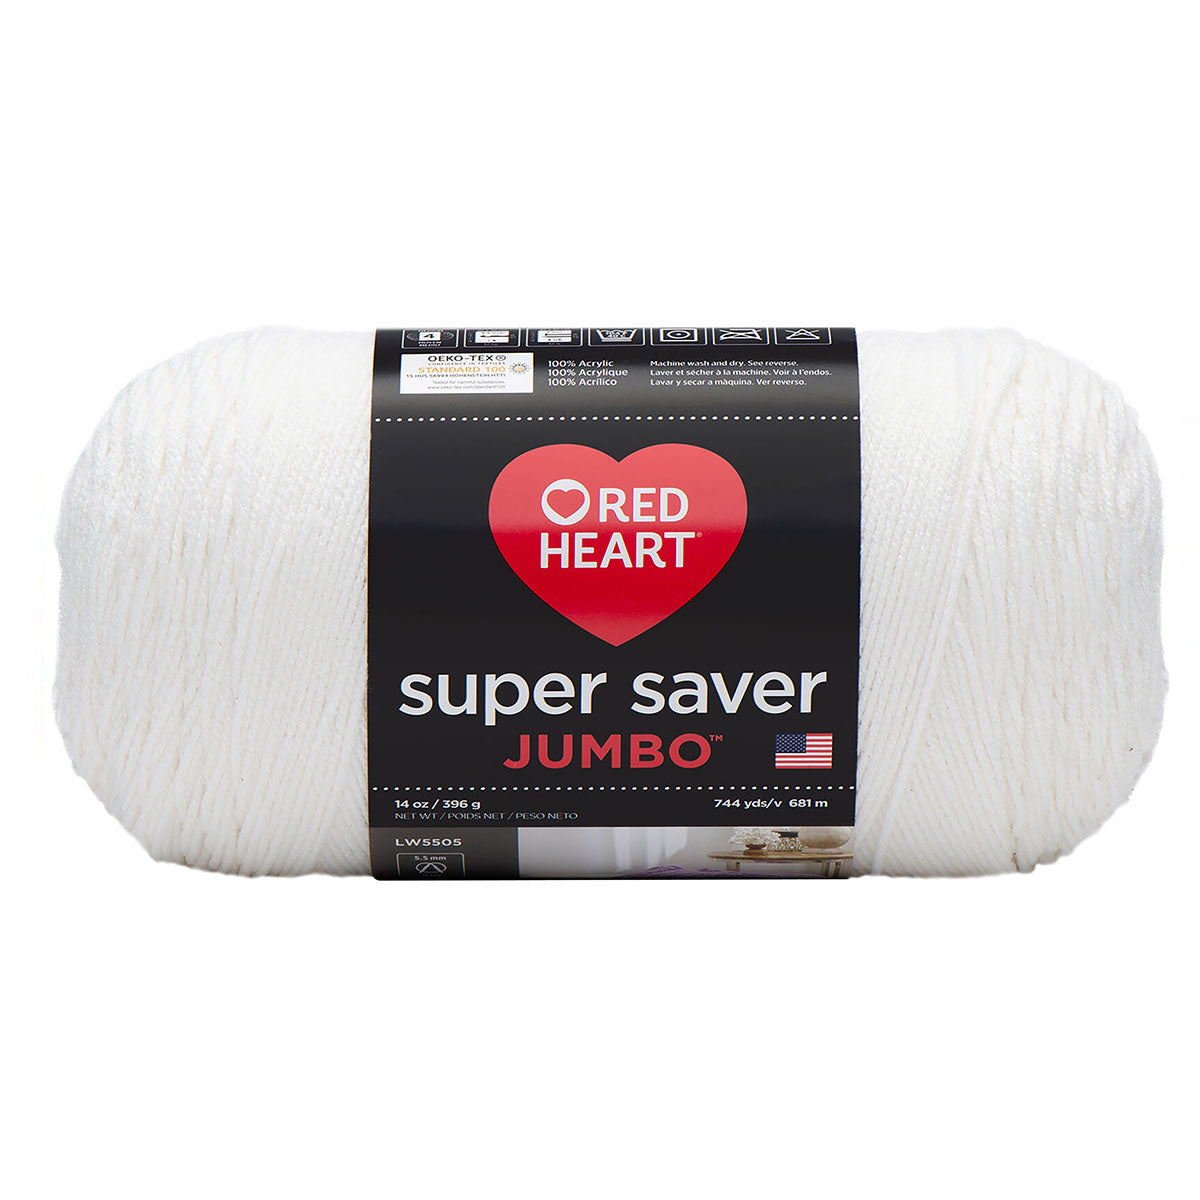 Red Heart Super Saver Jumbo Yarn - 744 yds